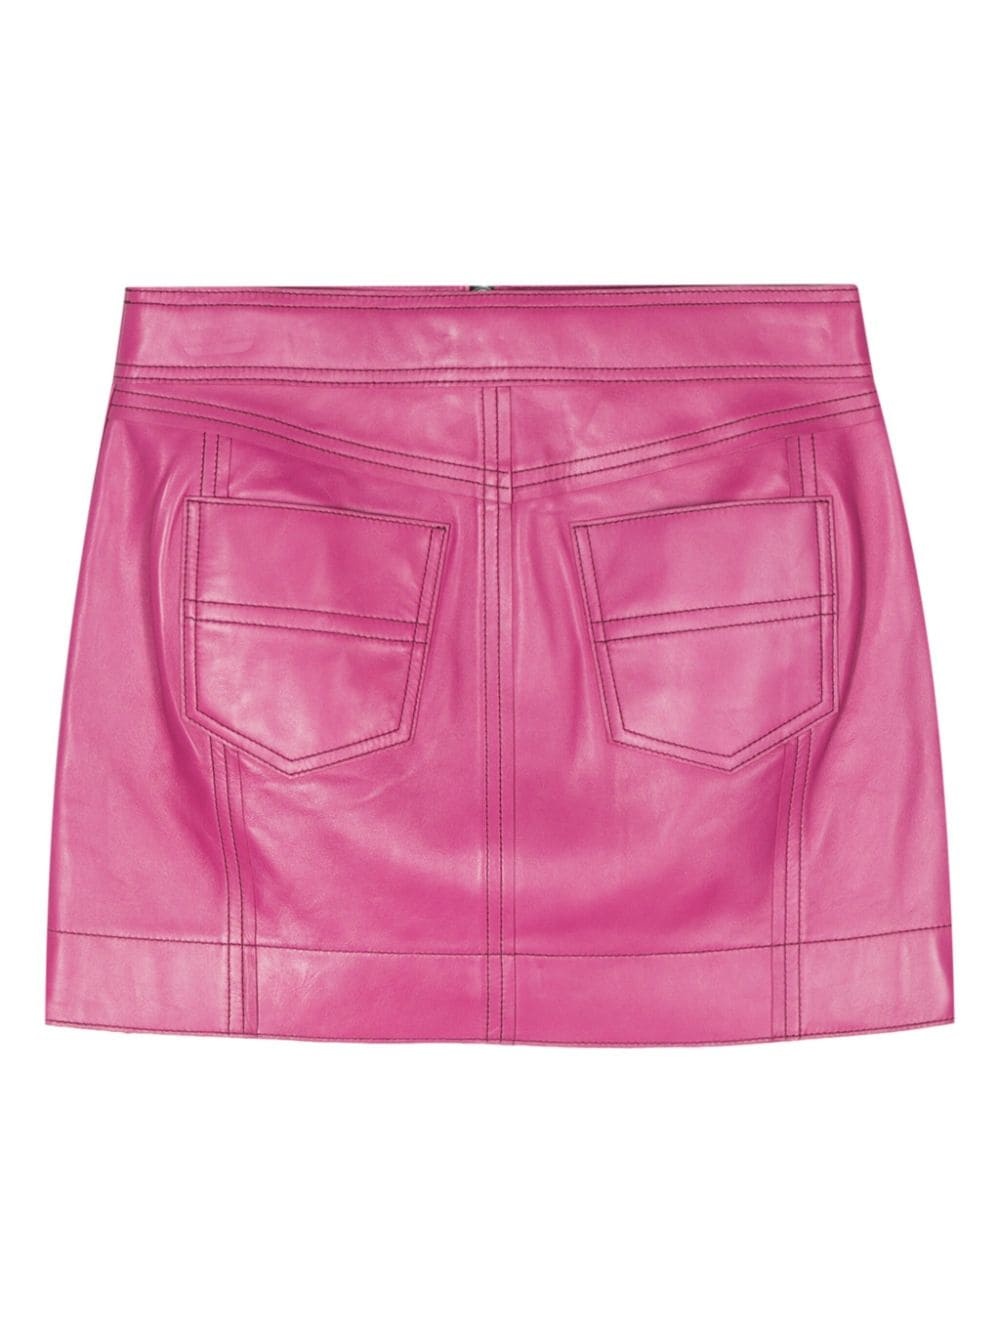 Kaelyn leather skirt - 2